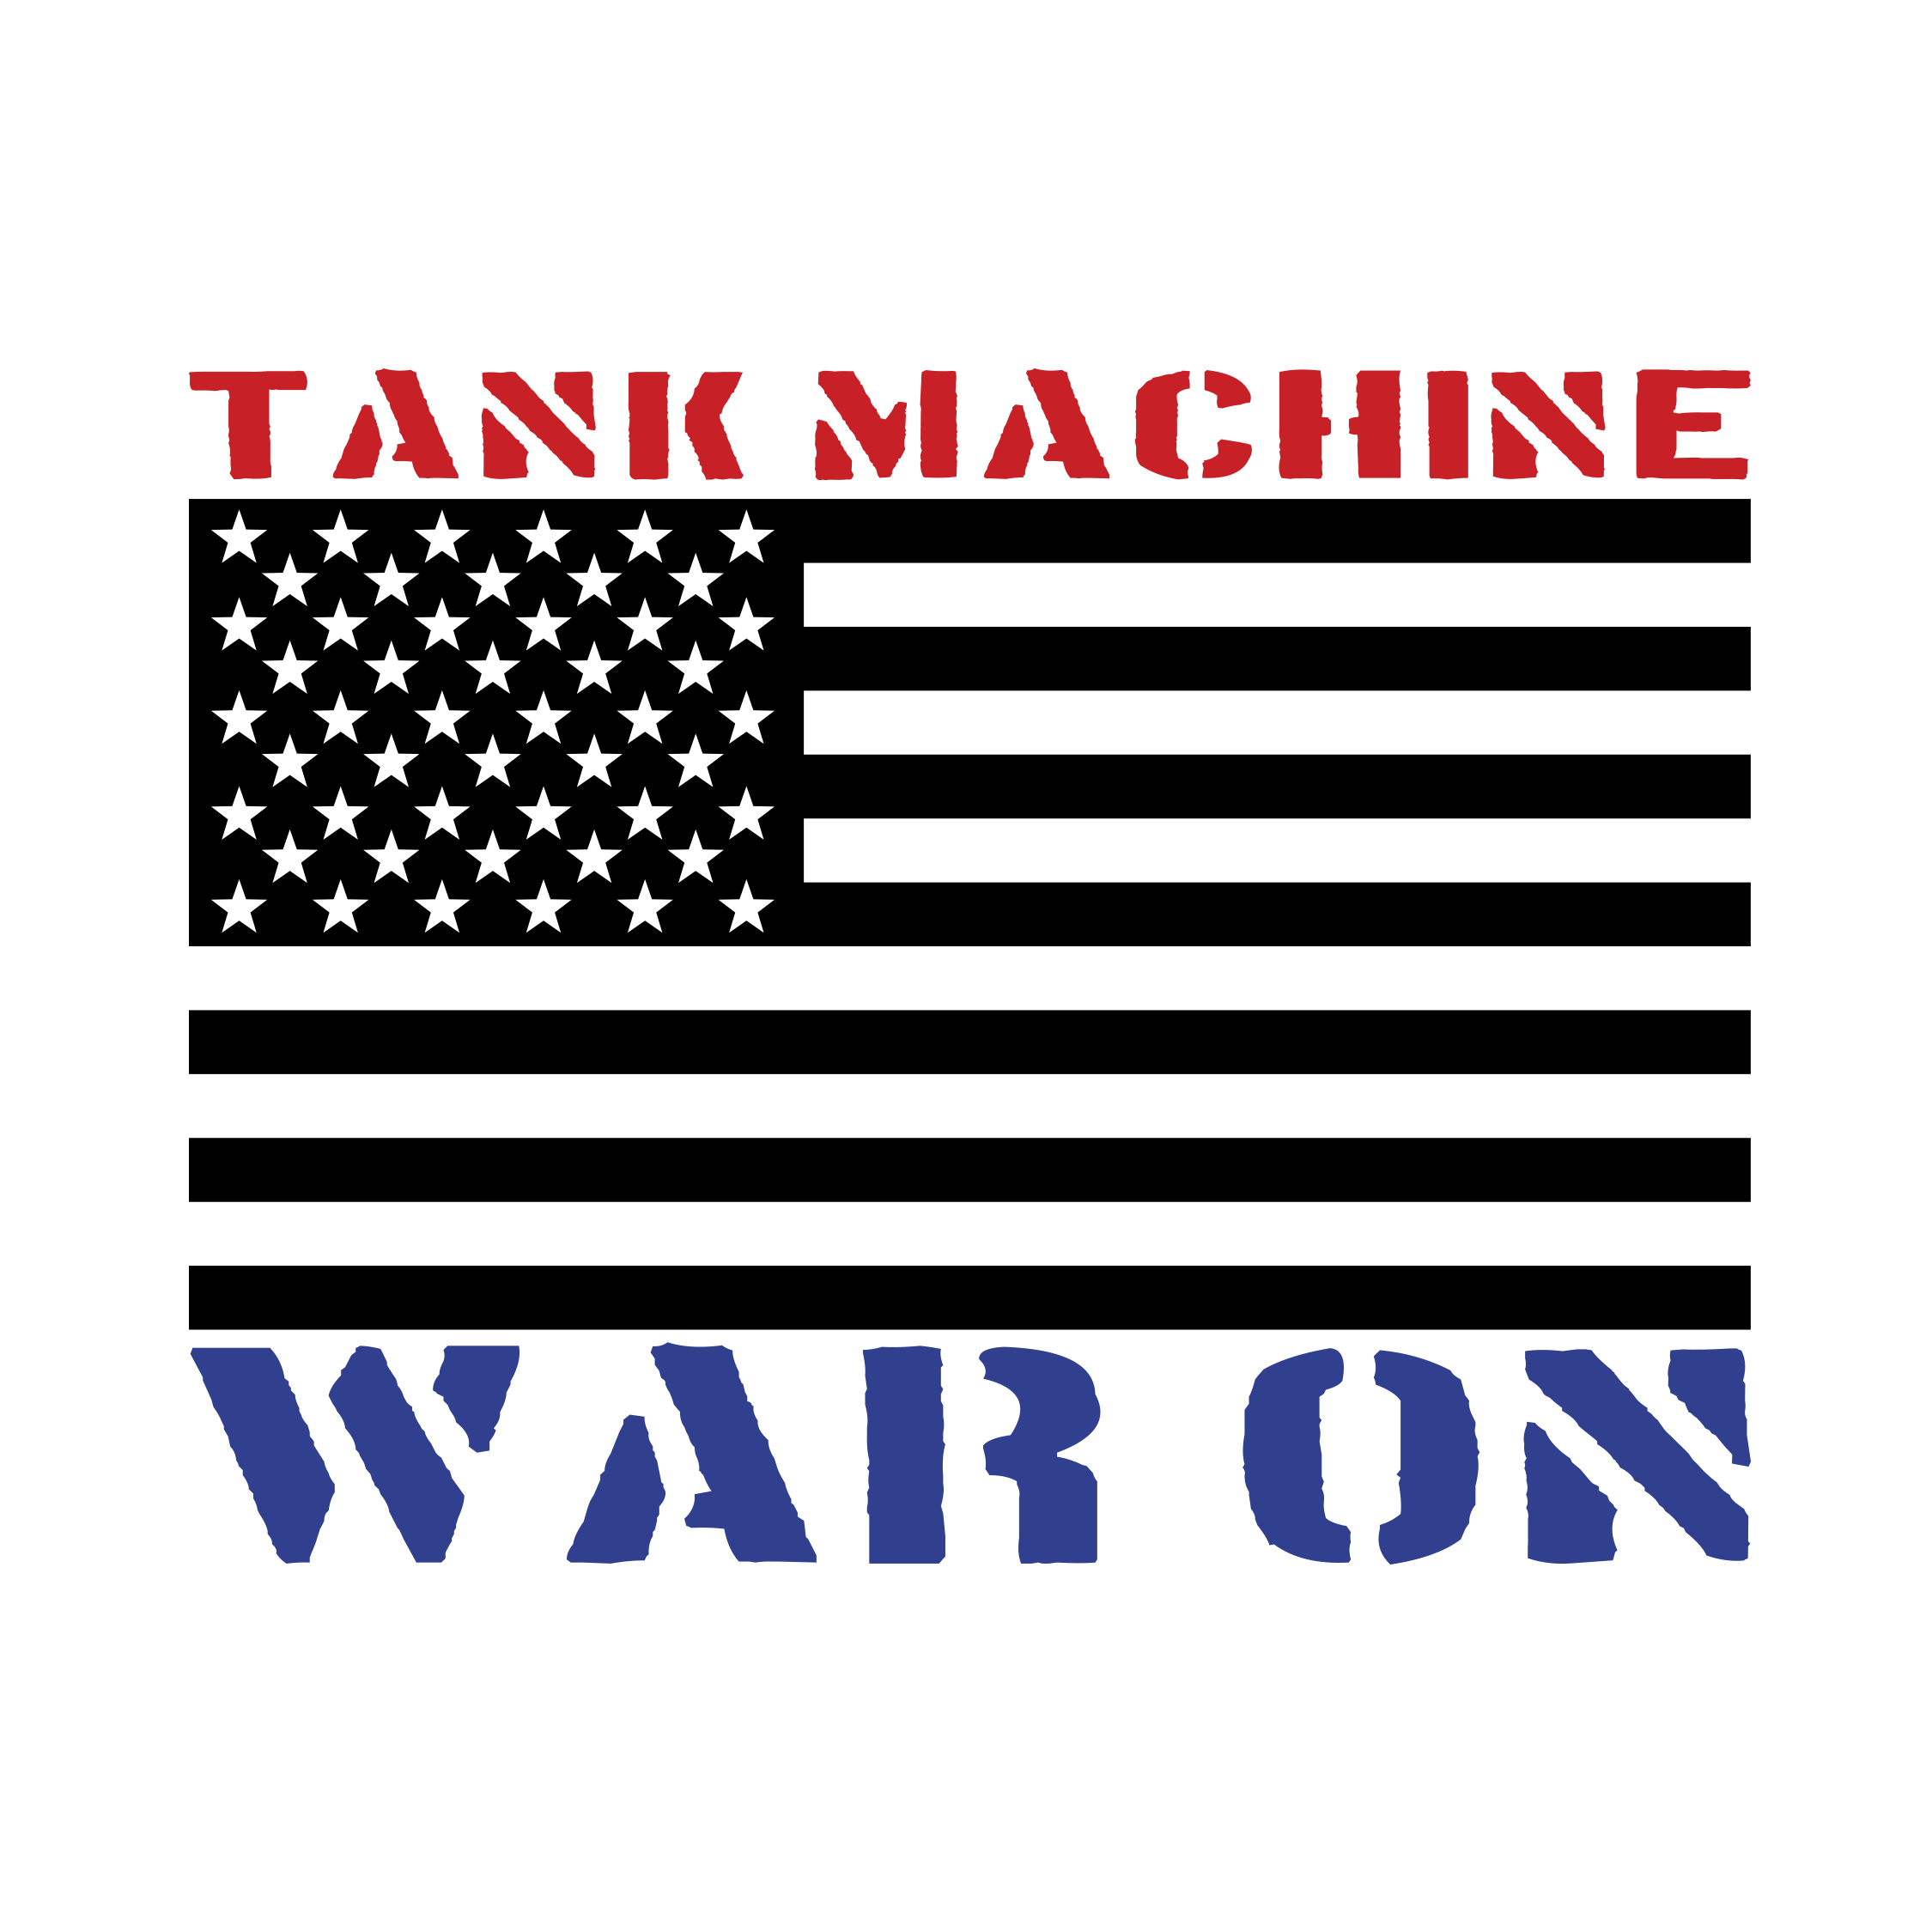 Tank Machine collection